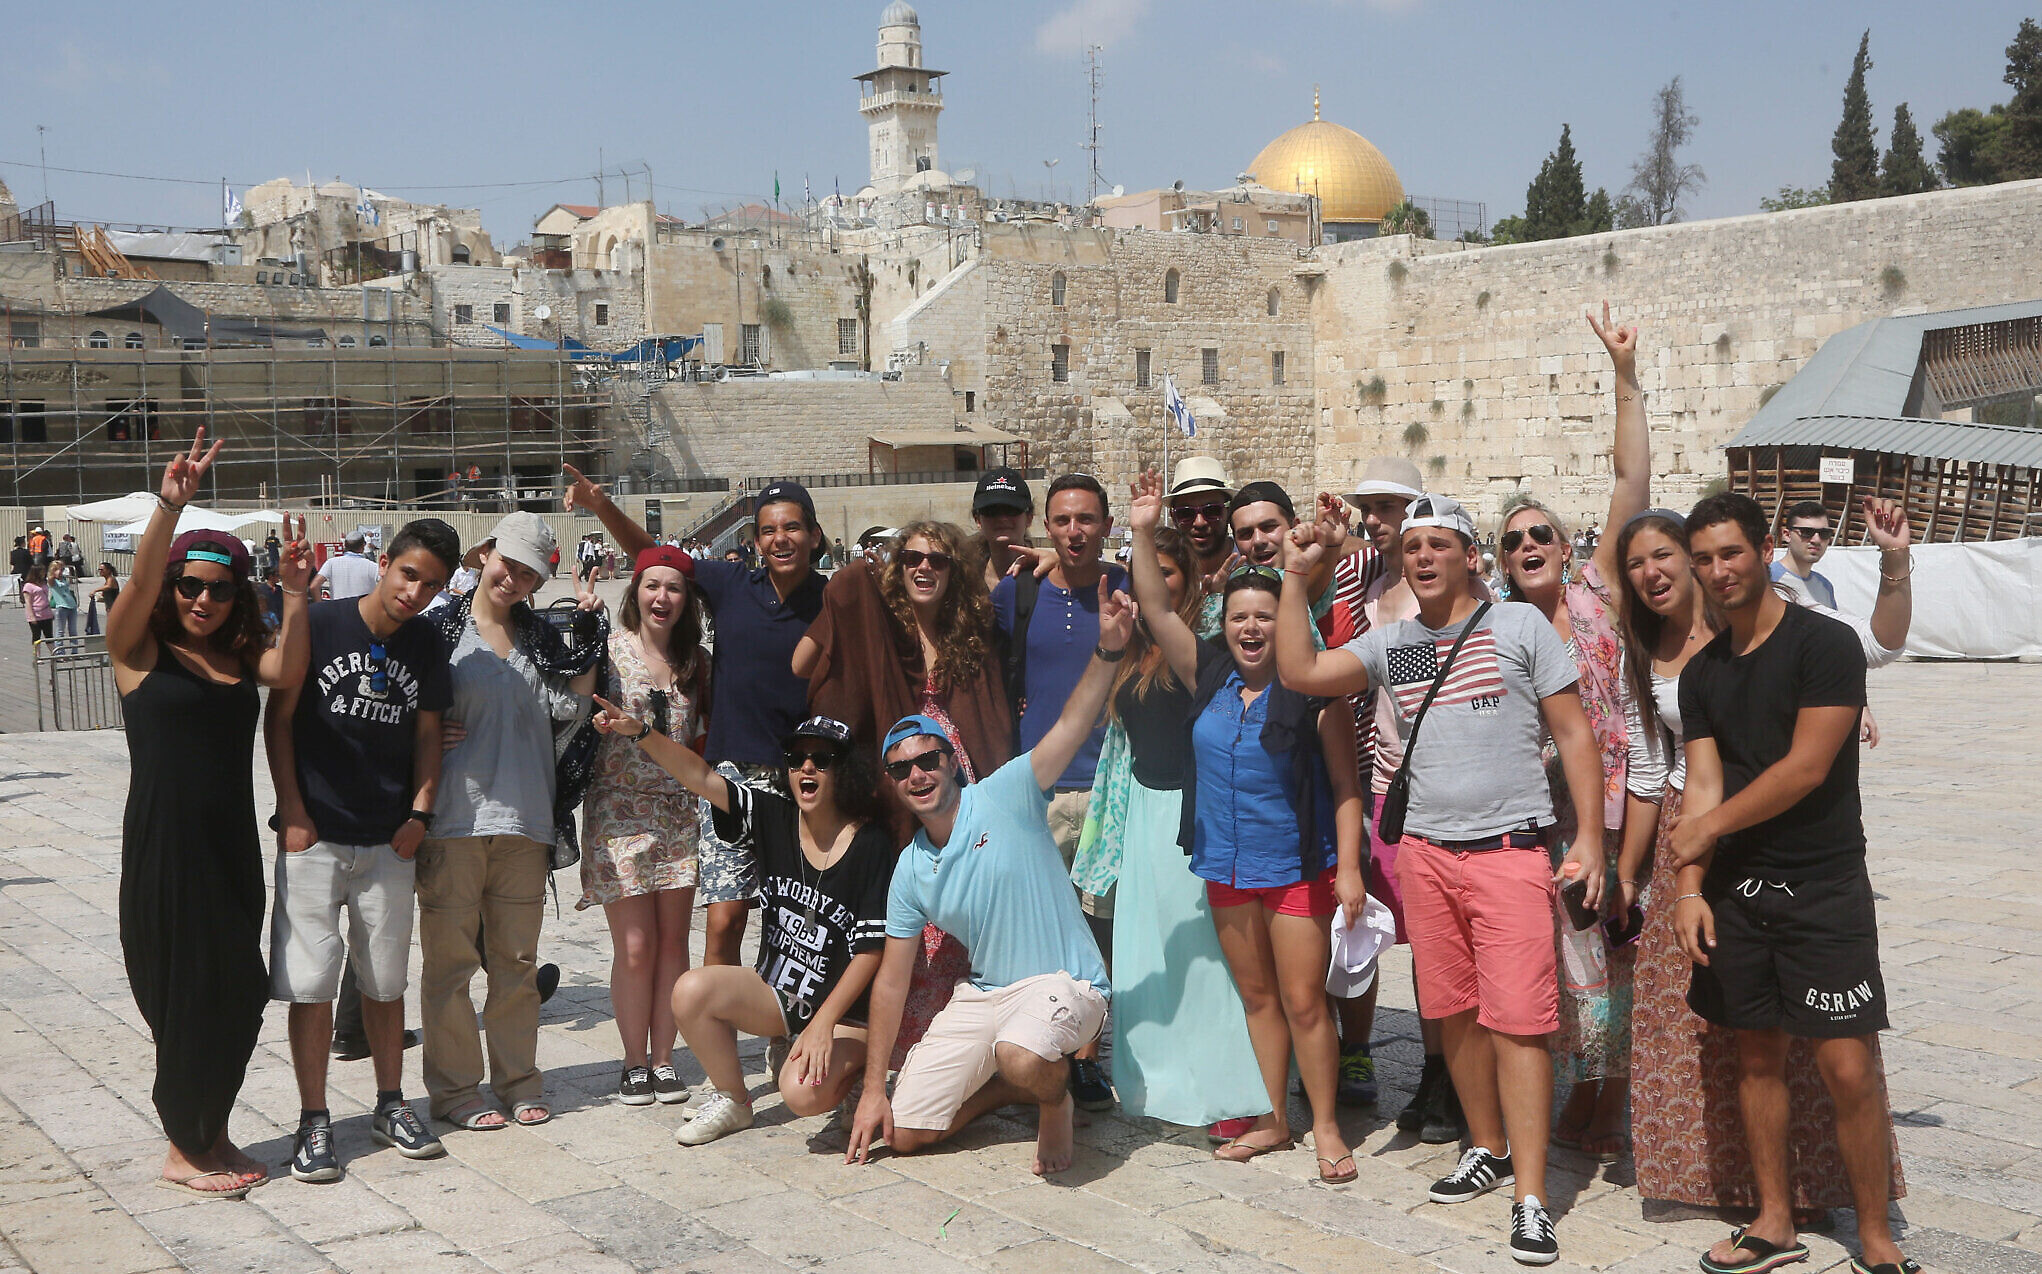 birthright trip to israel